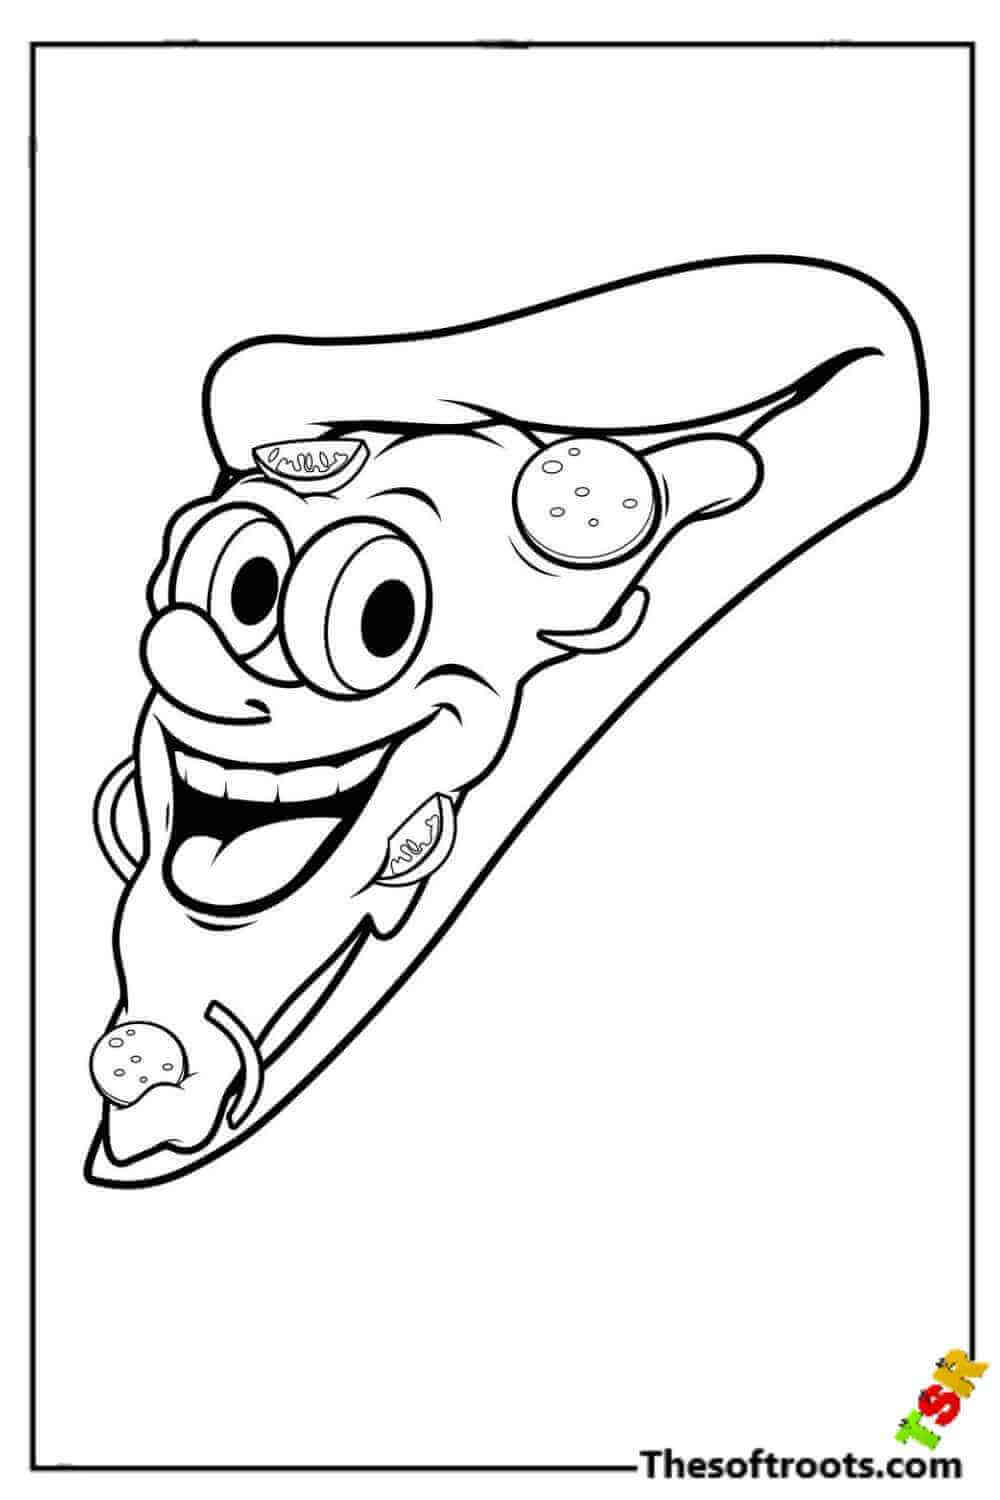 Piza Coloring Page